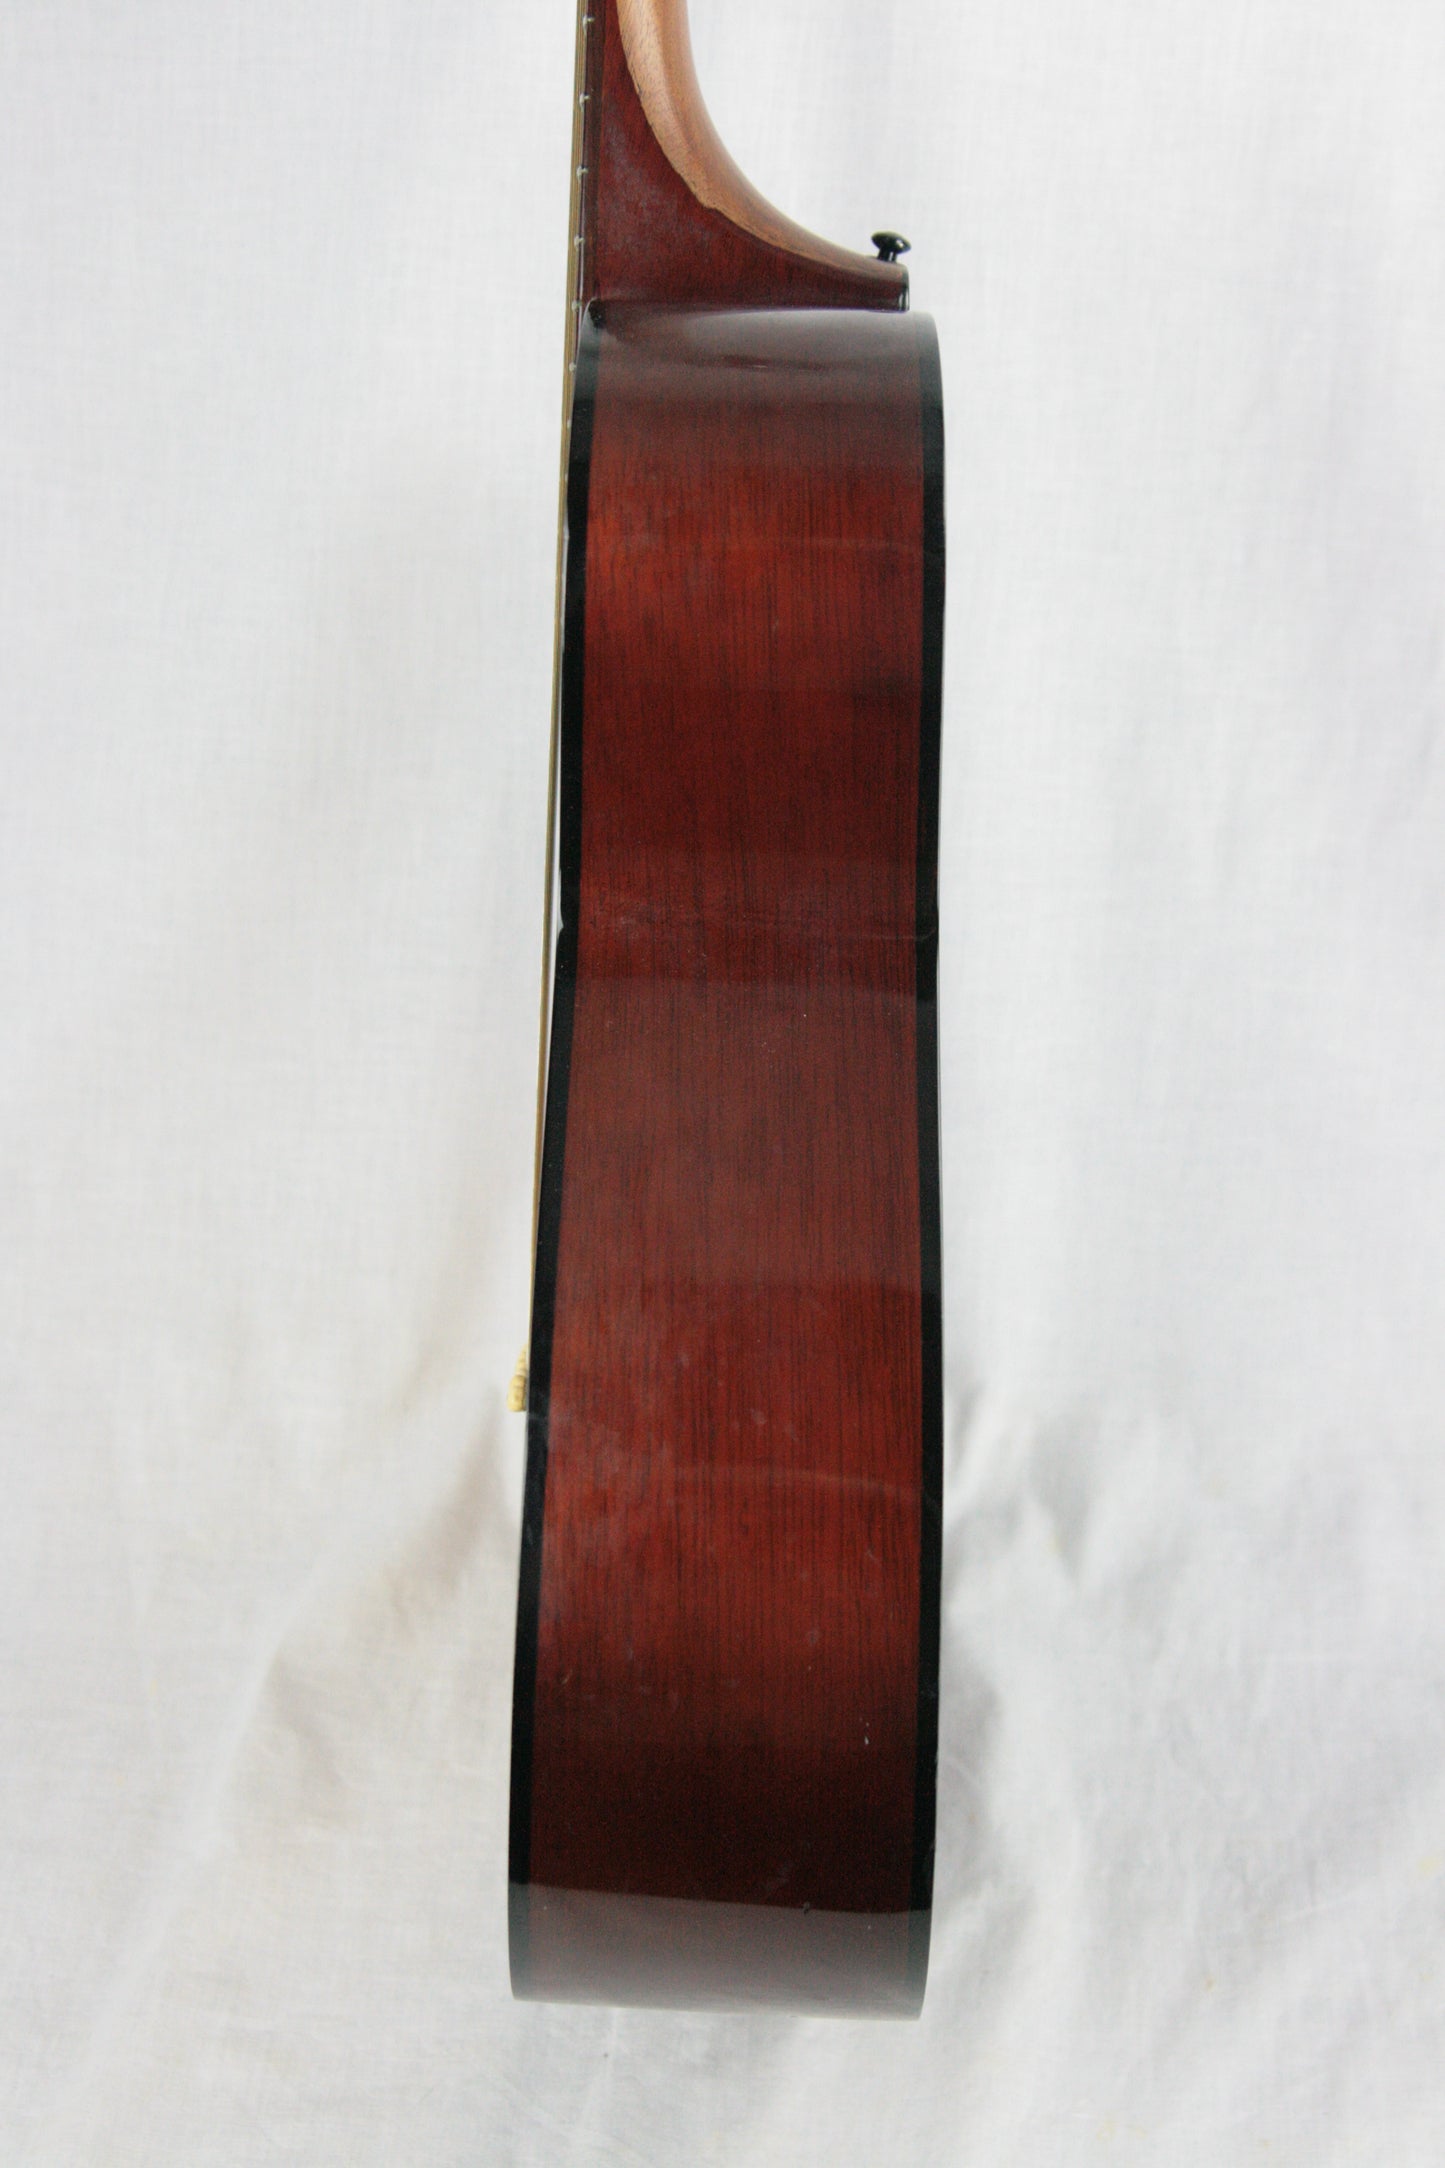 1976 Guild F-20 NT Troubador Natural Acoustic Guitar! Small-Body Vintage